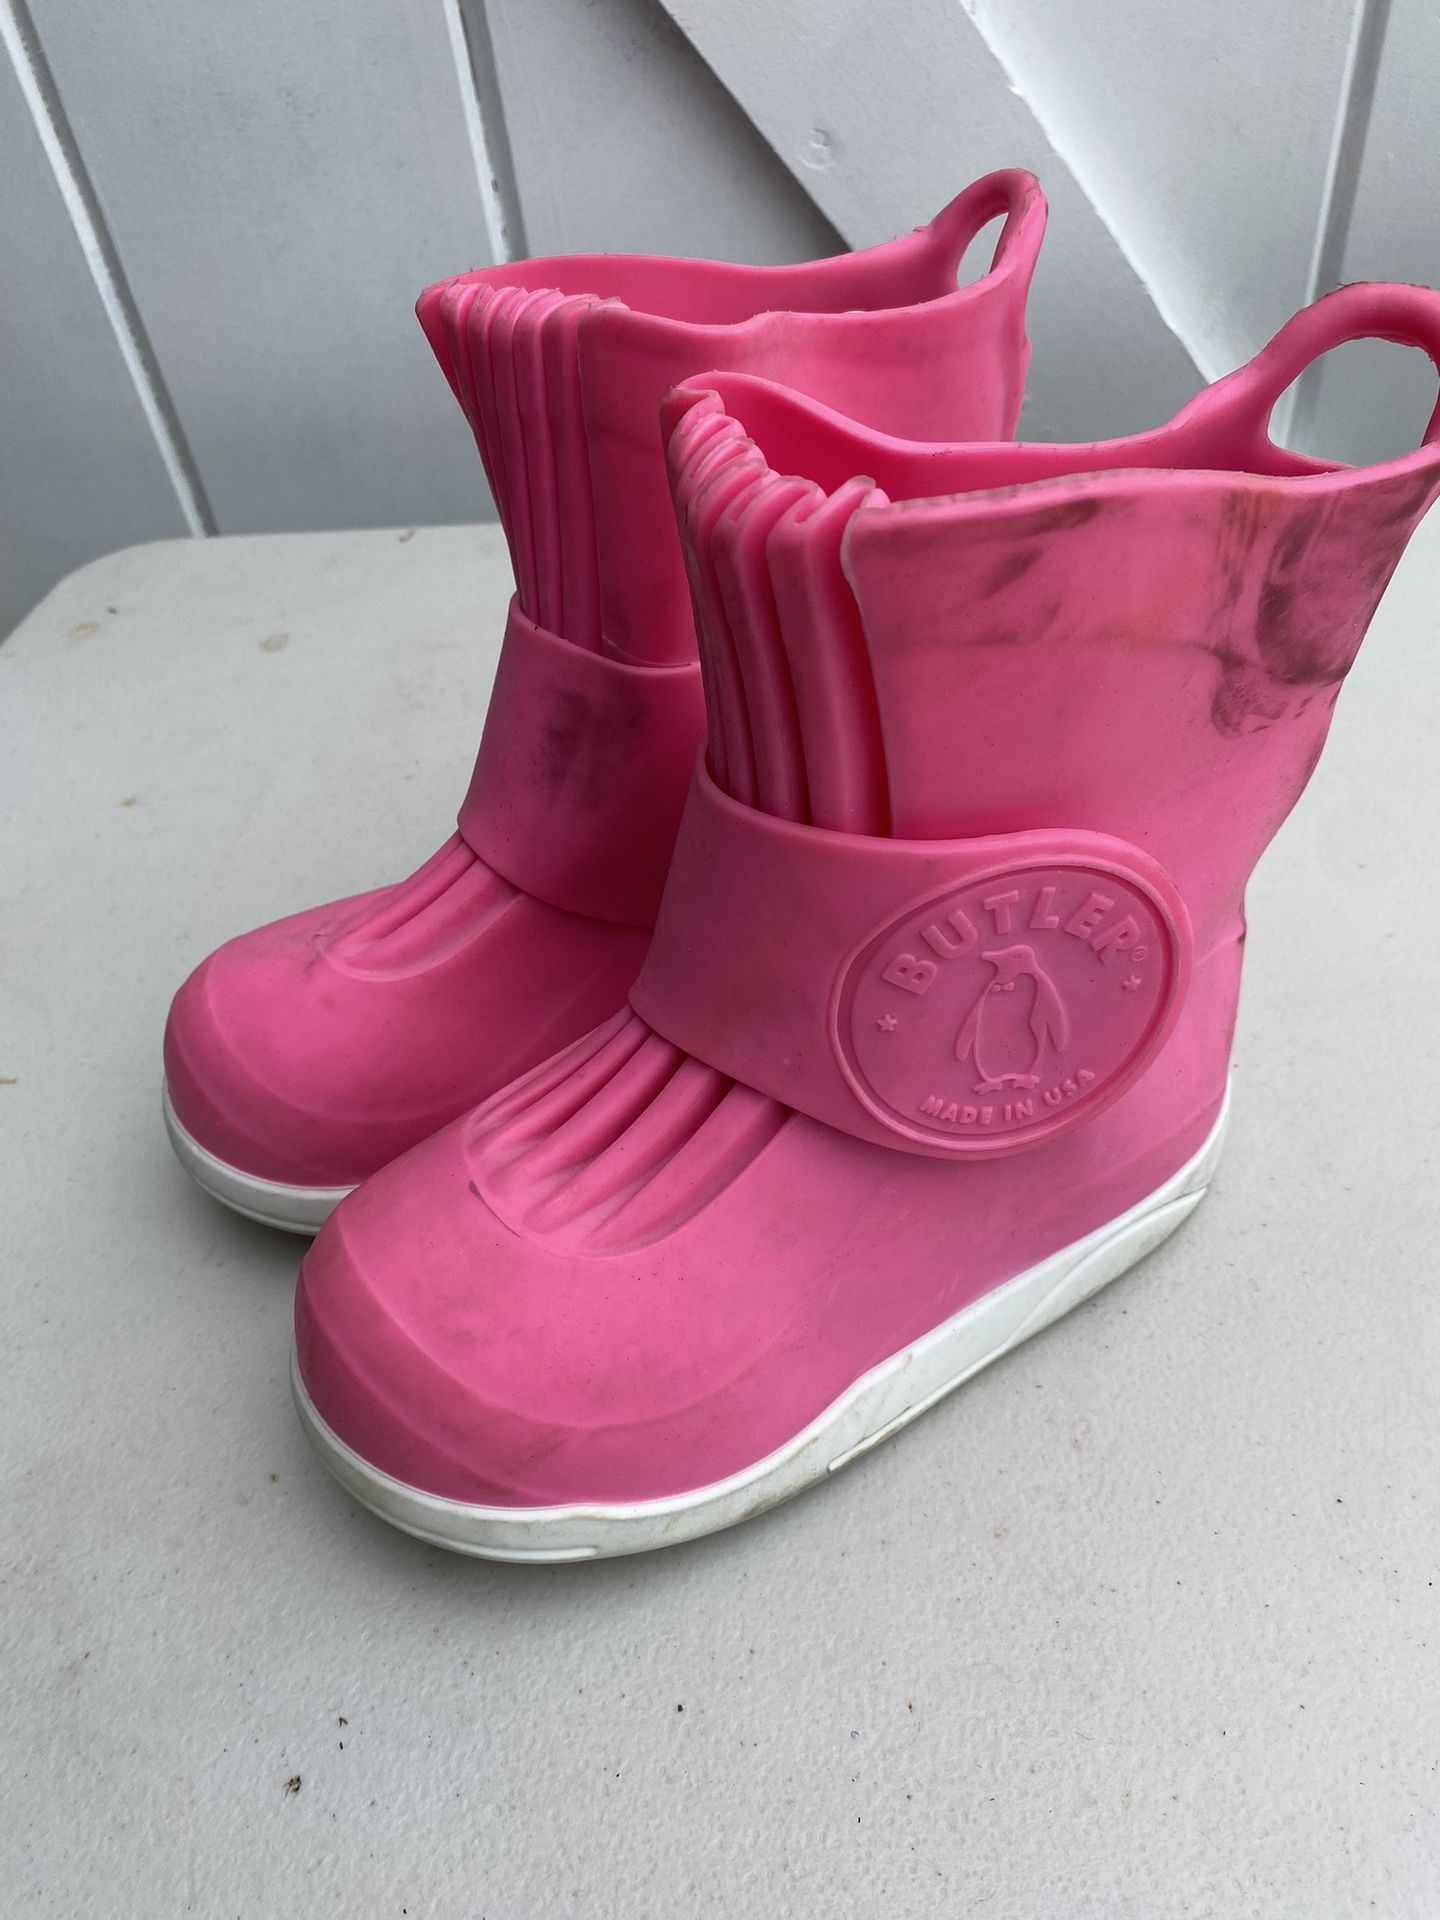 Butler Overboot Pink Passion Unisex Kids Rain Boots Size 12m Thru 01